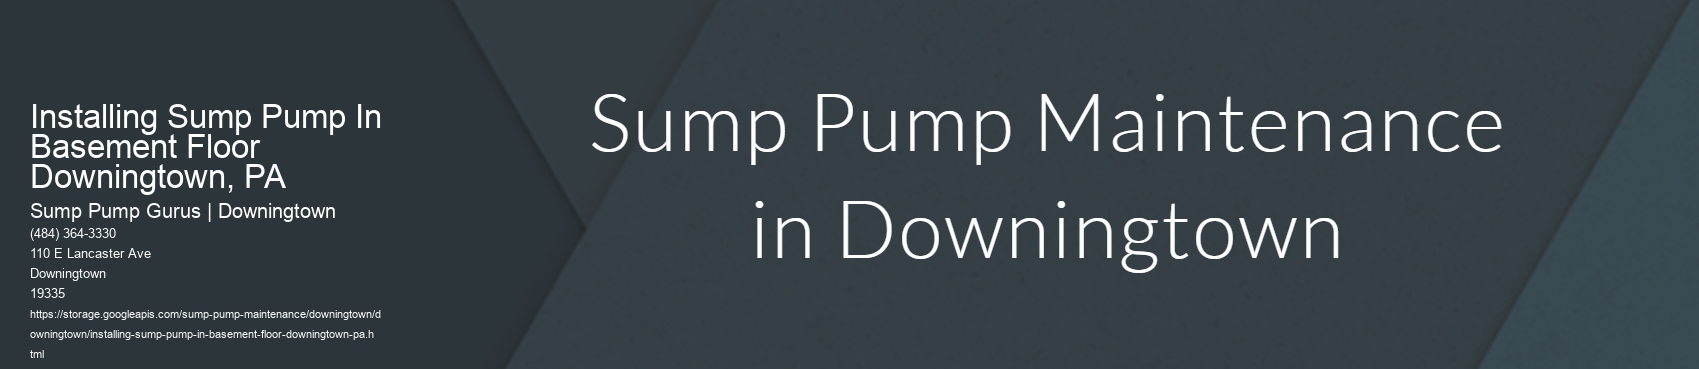 Installing Sump Pump In Basement Floor Downingtown, PA